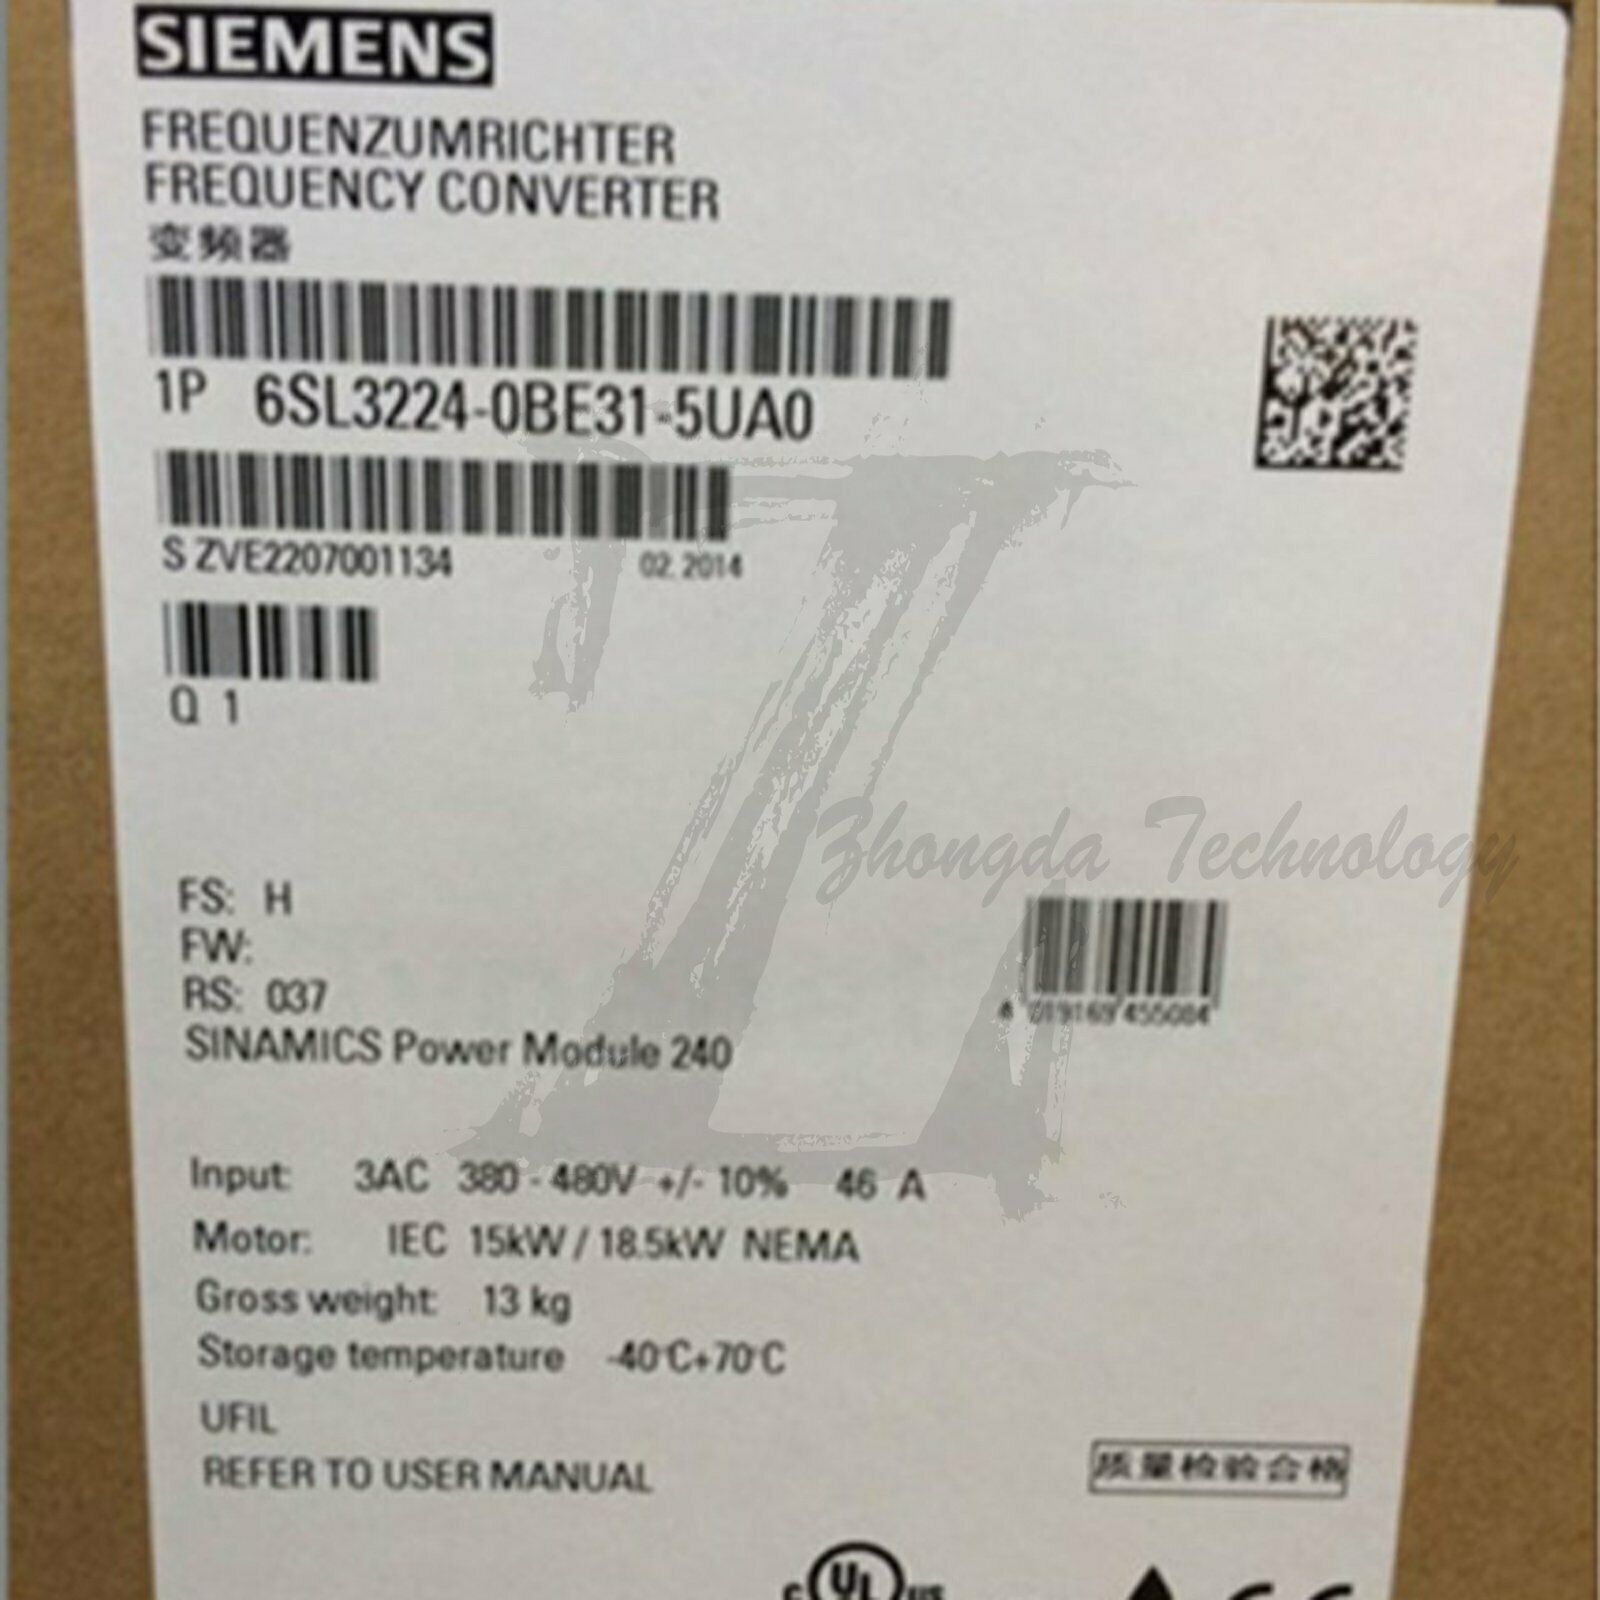 New Siemens Inverter G120 Series 6SL3224-0BE31-5UA0 18.5KW Power Module